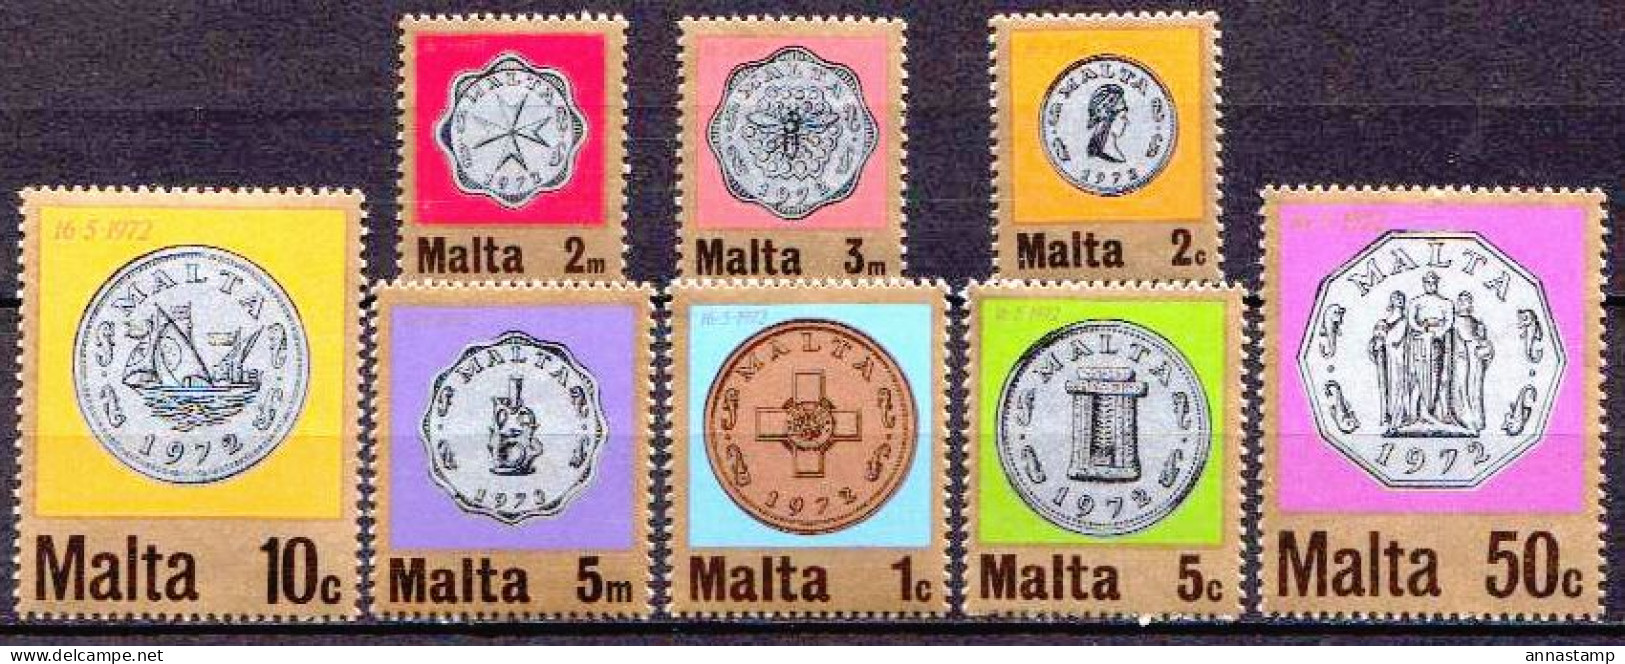 Malta MNH Set - Monedas